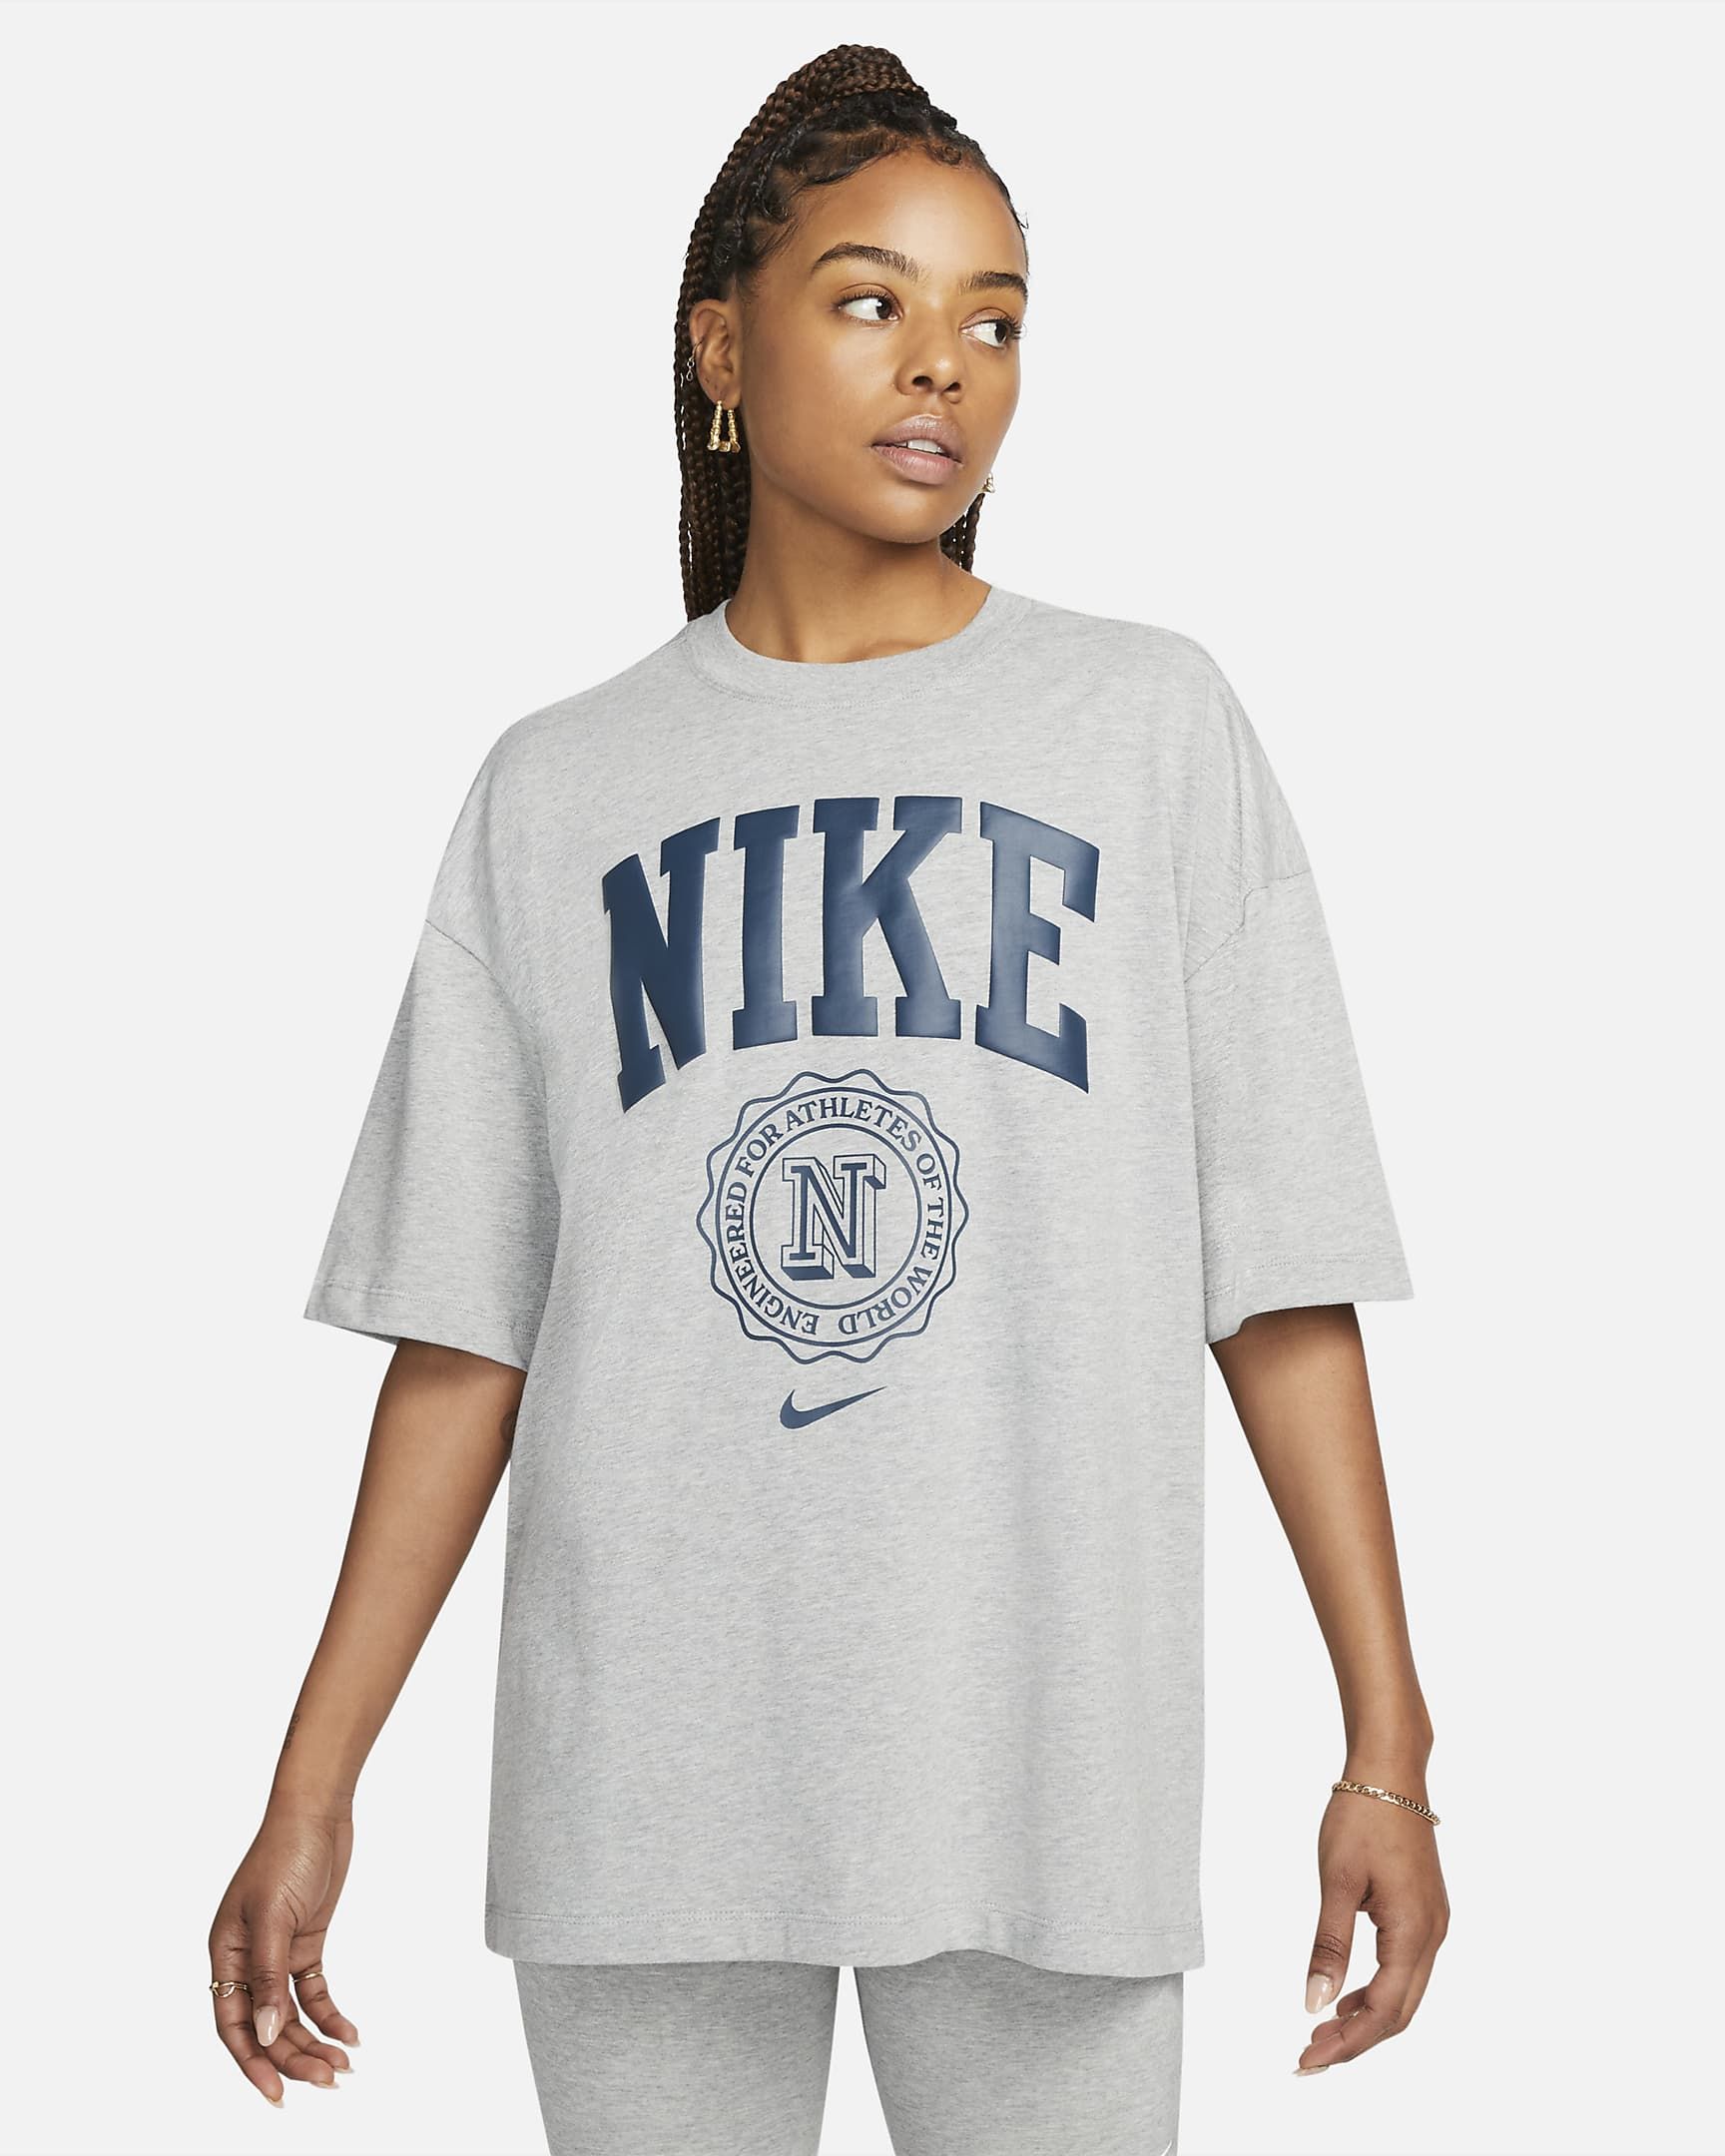 Nike Sportswear Essentials Women's T-Shirt. Nike.com | Nike (US)